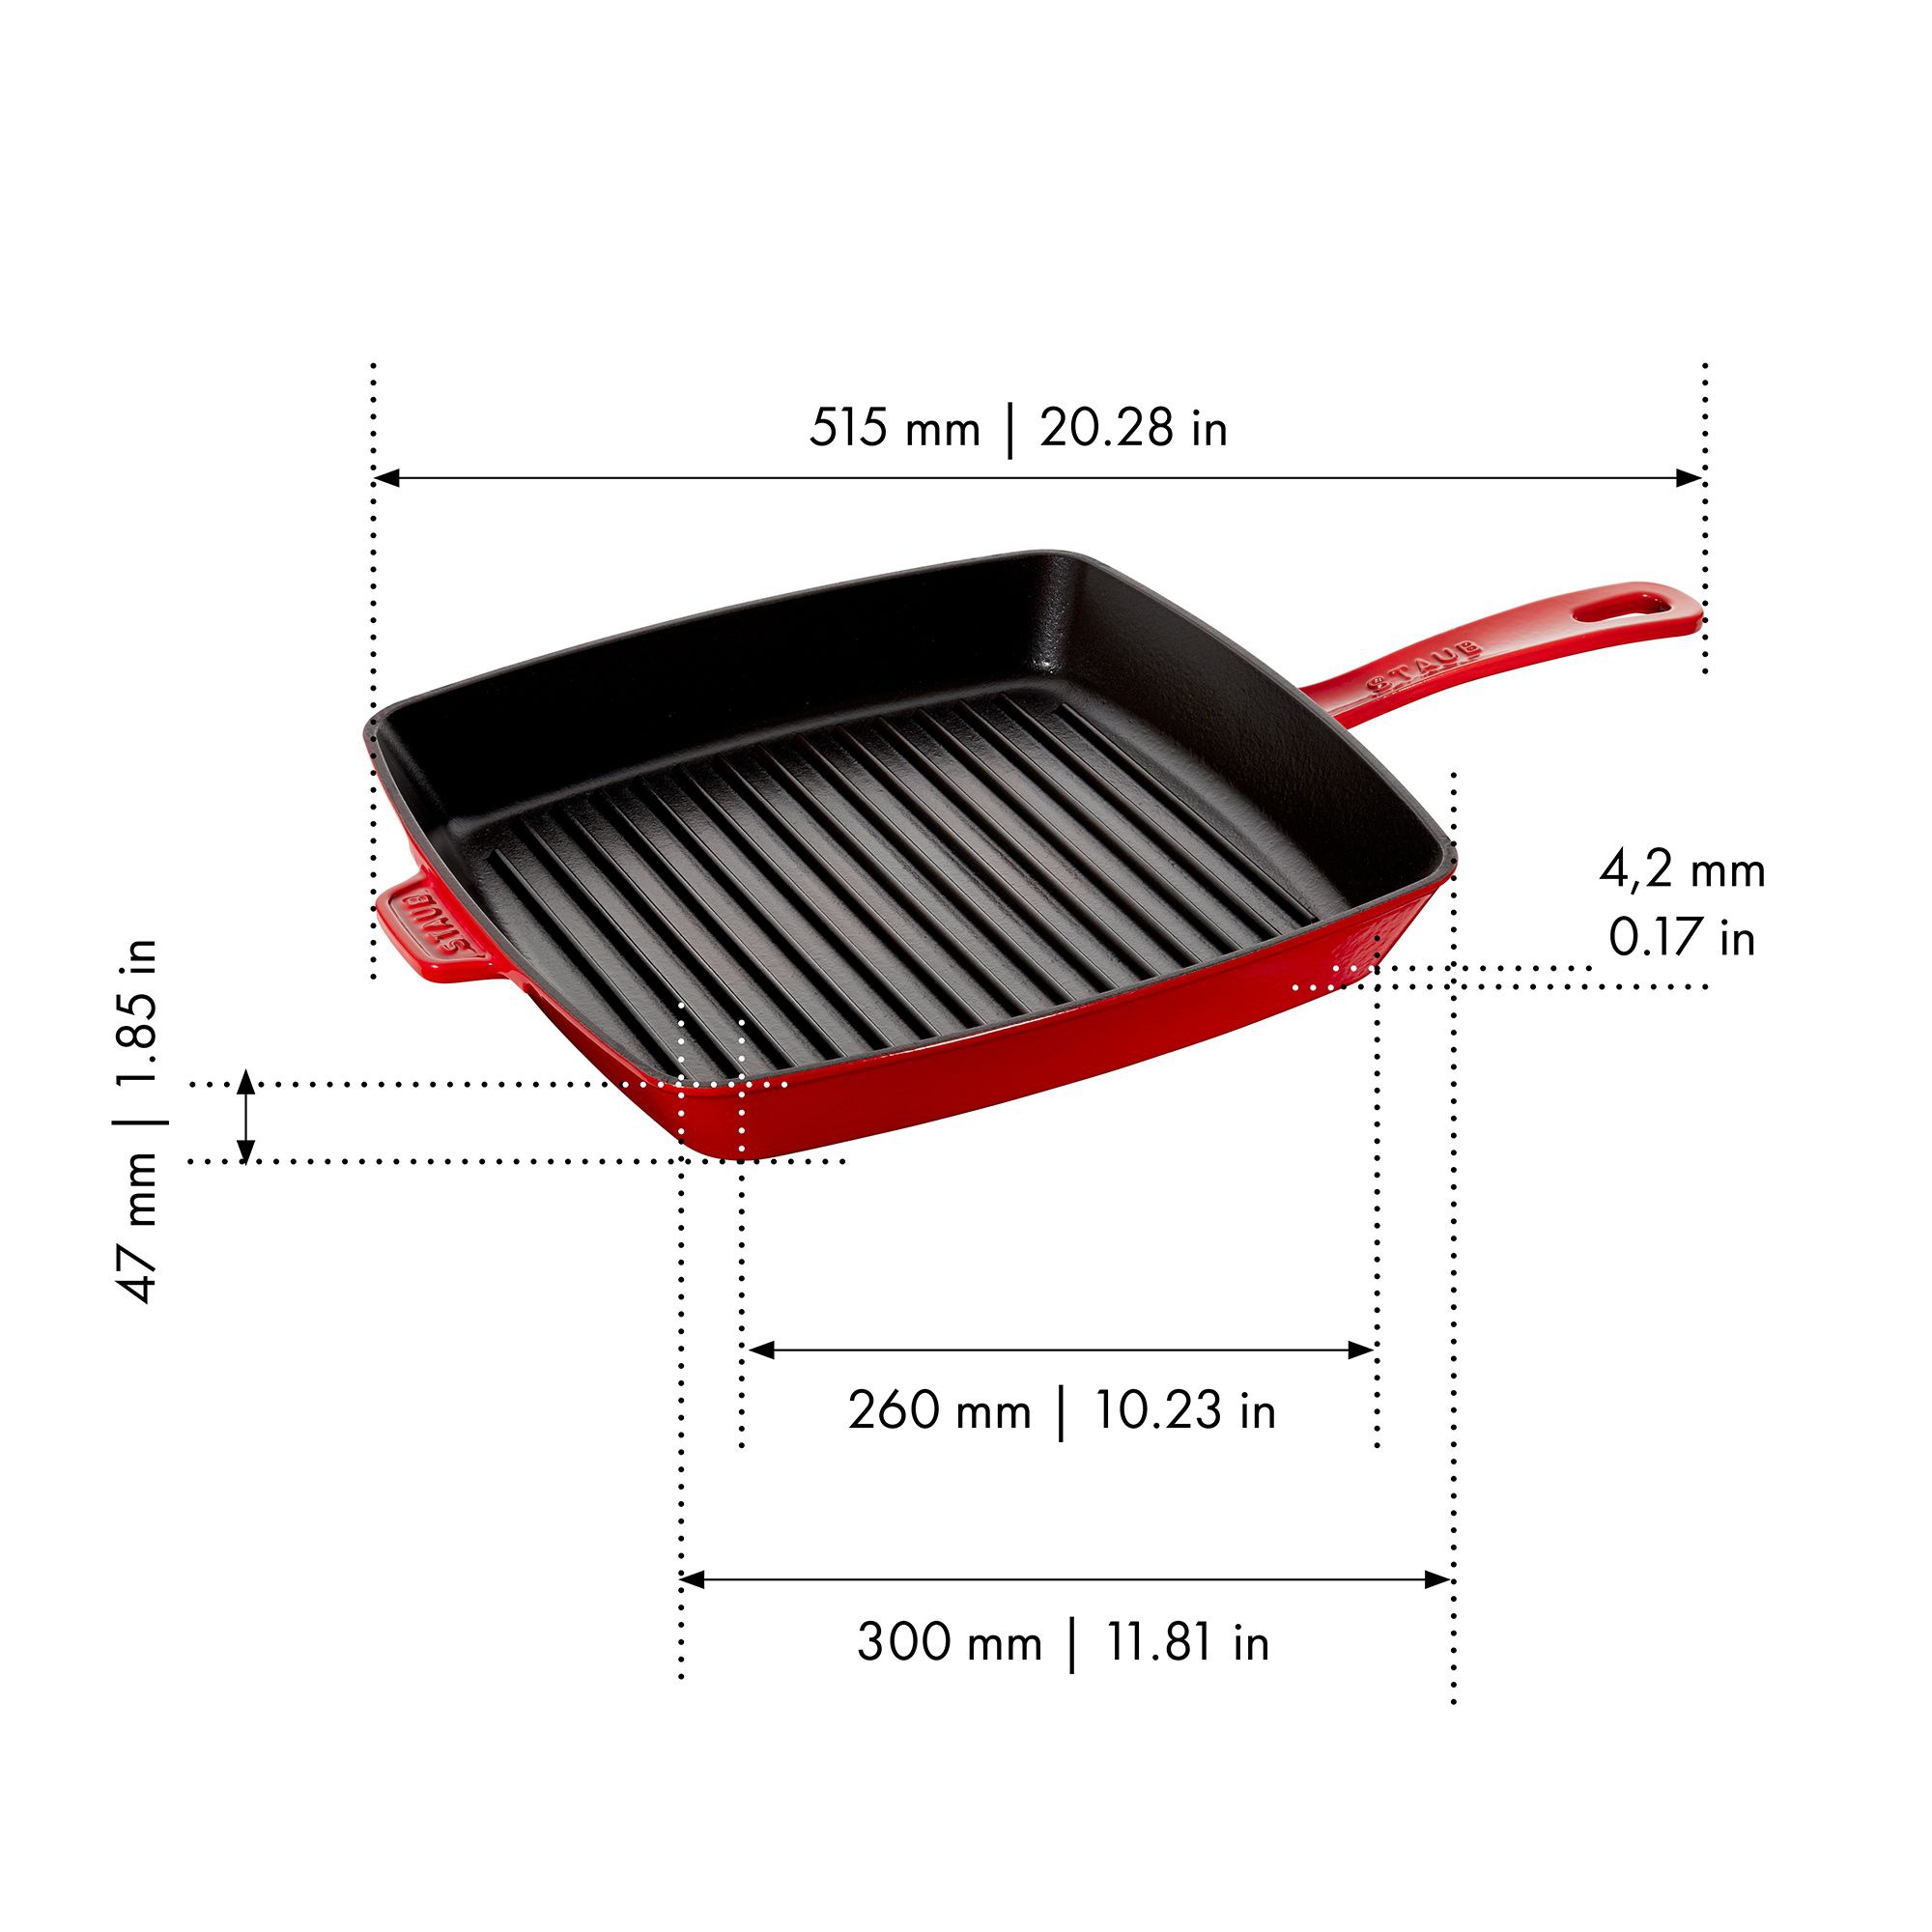 Staub - grill pan - square - 30 cm